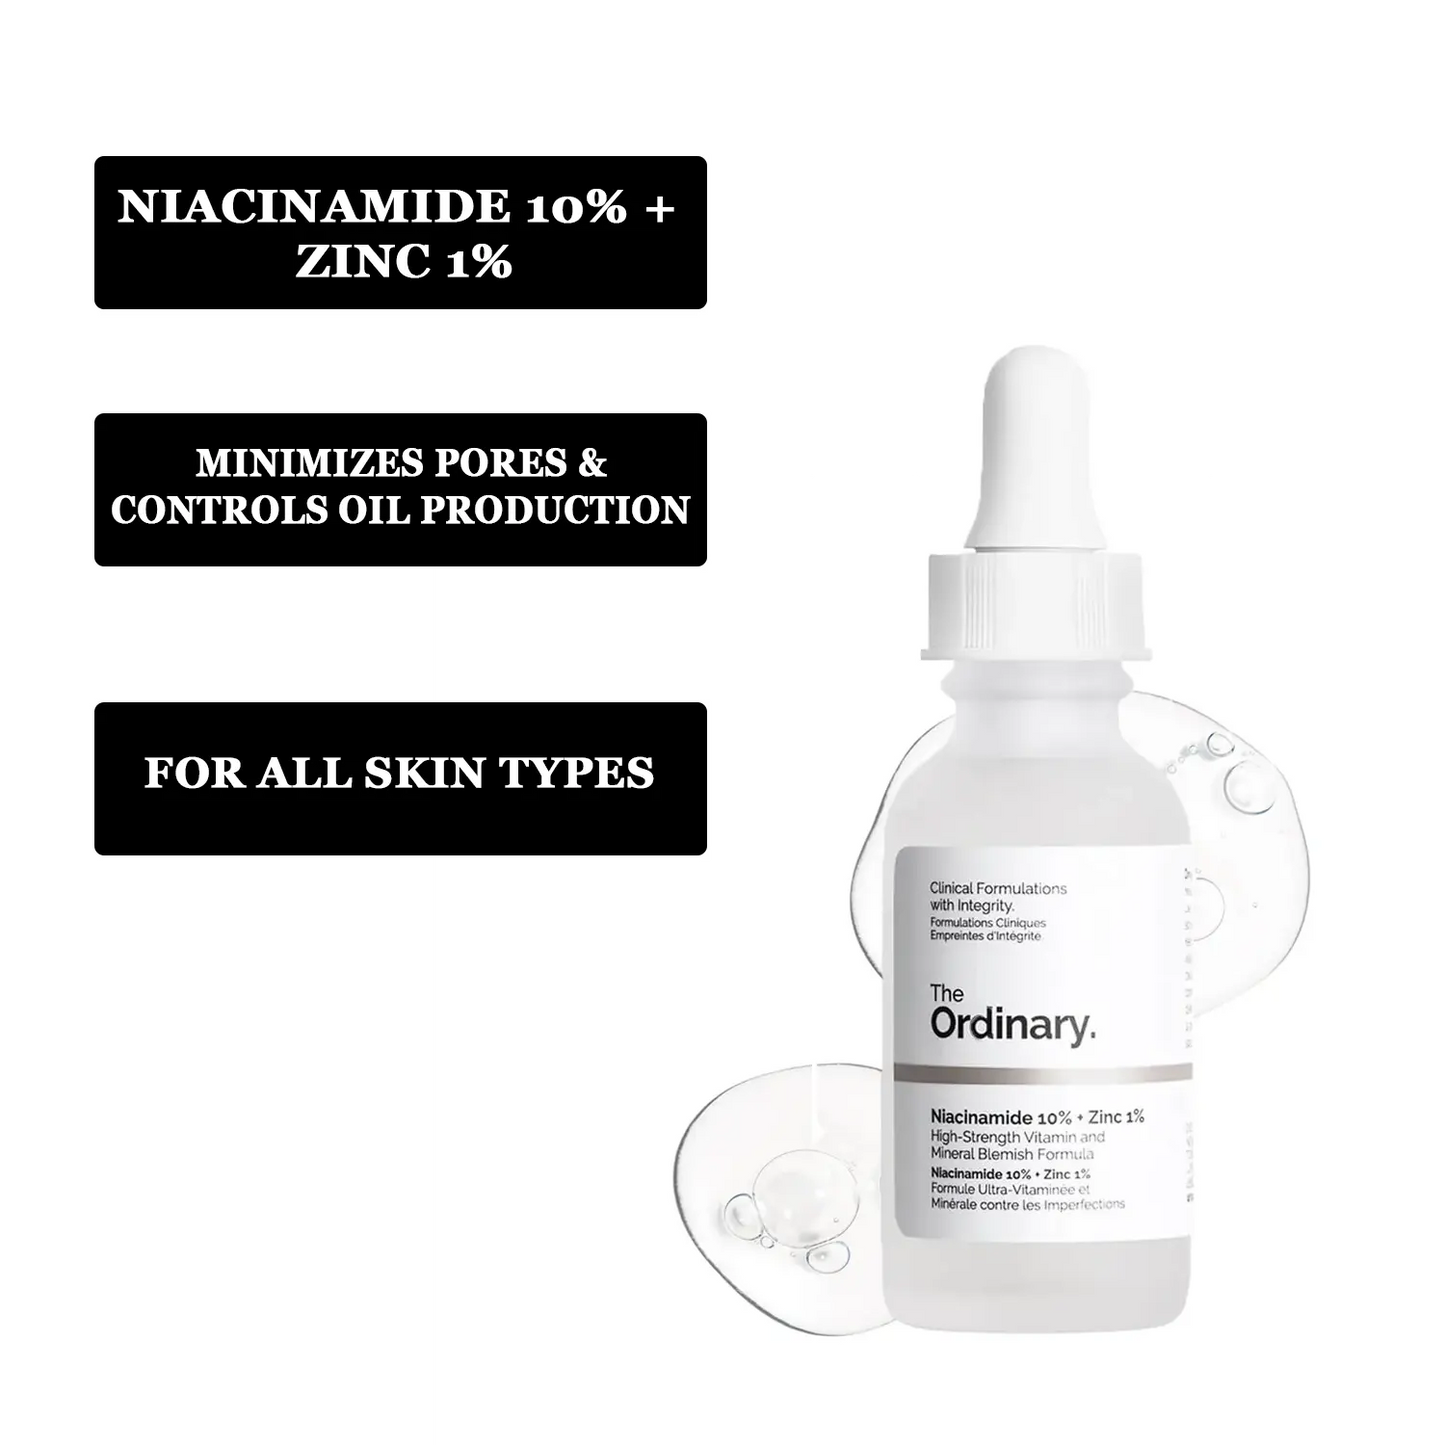 The Ordinary Niacinamide 10% + Zinc 1%™